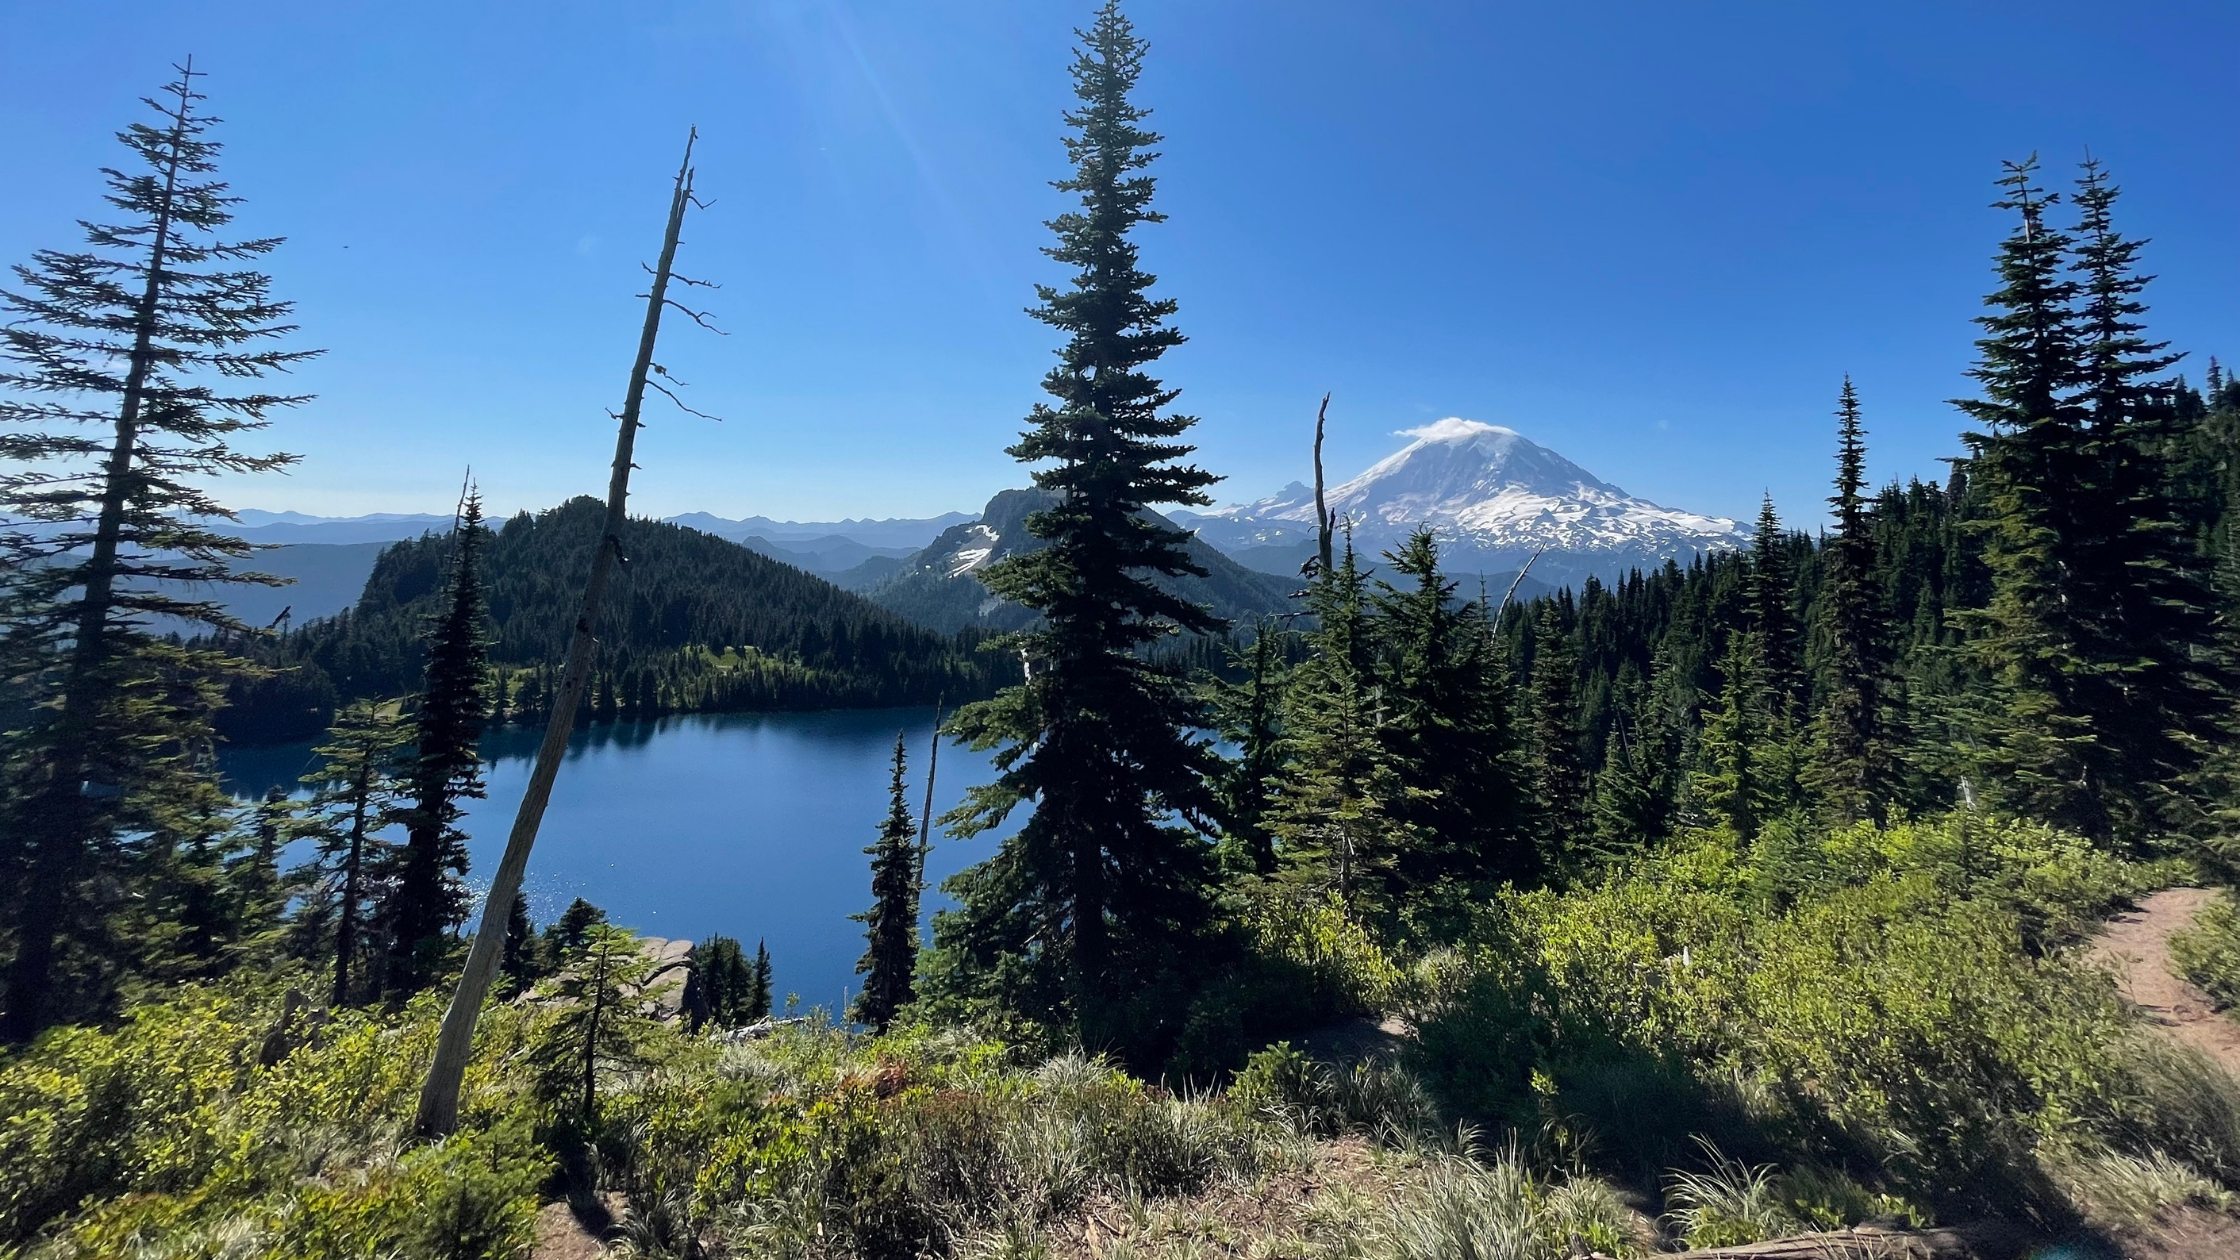 Day Hiking Summit Lake- Mt. Rainier Area